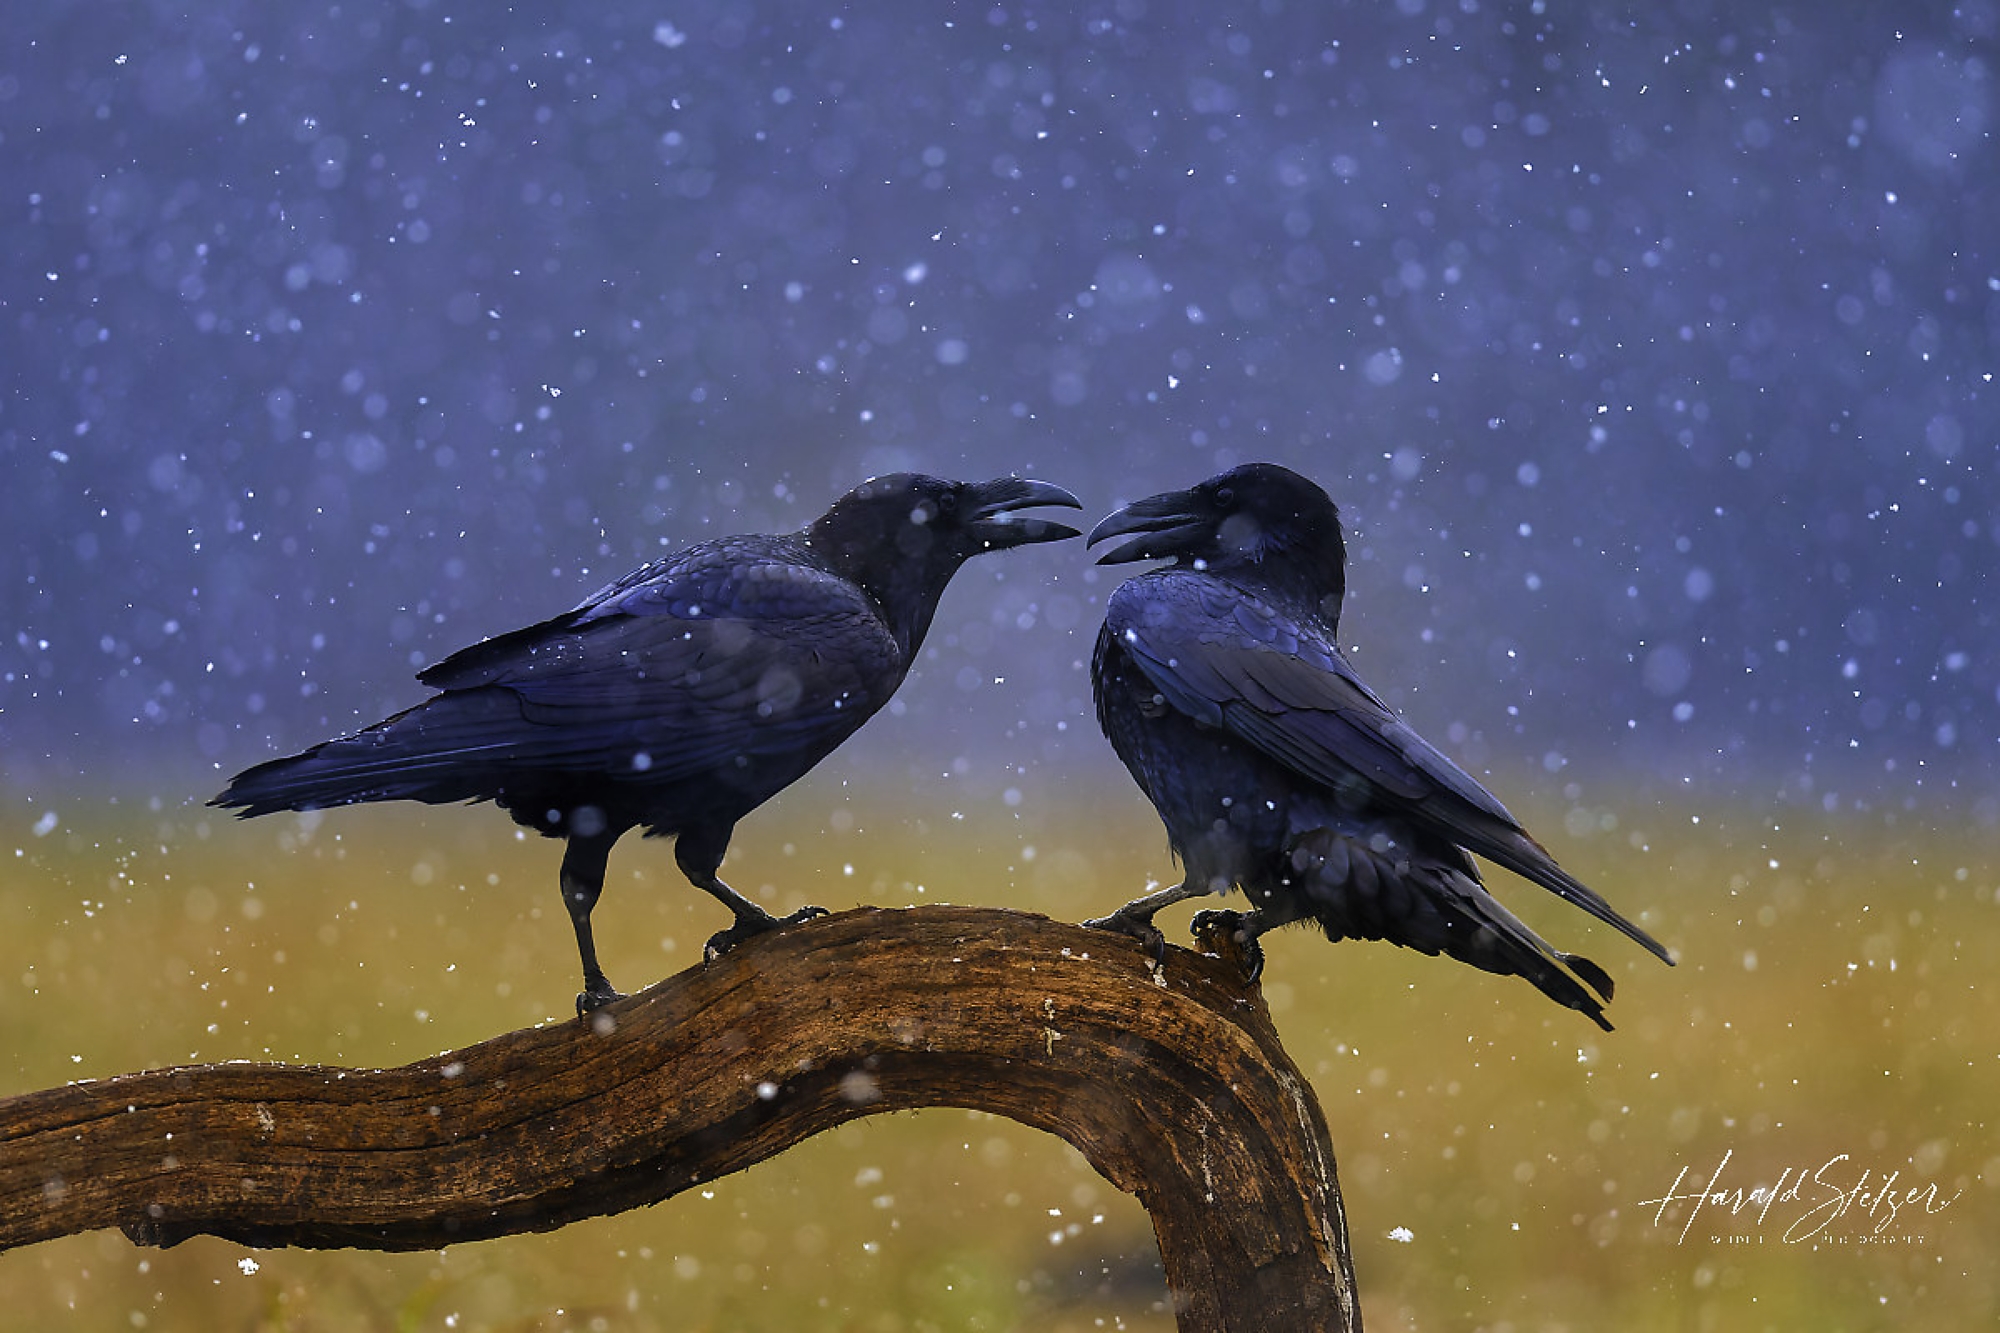 Kolkraben im Schnee/common ravens in the snow 